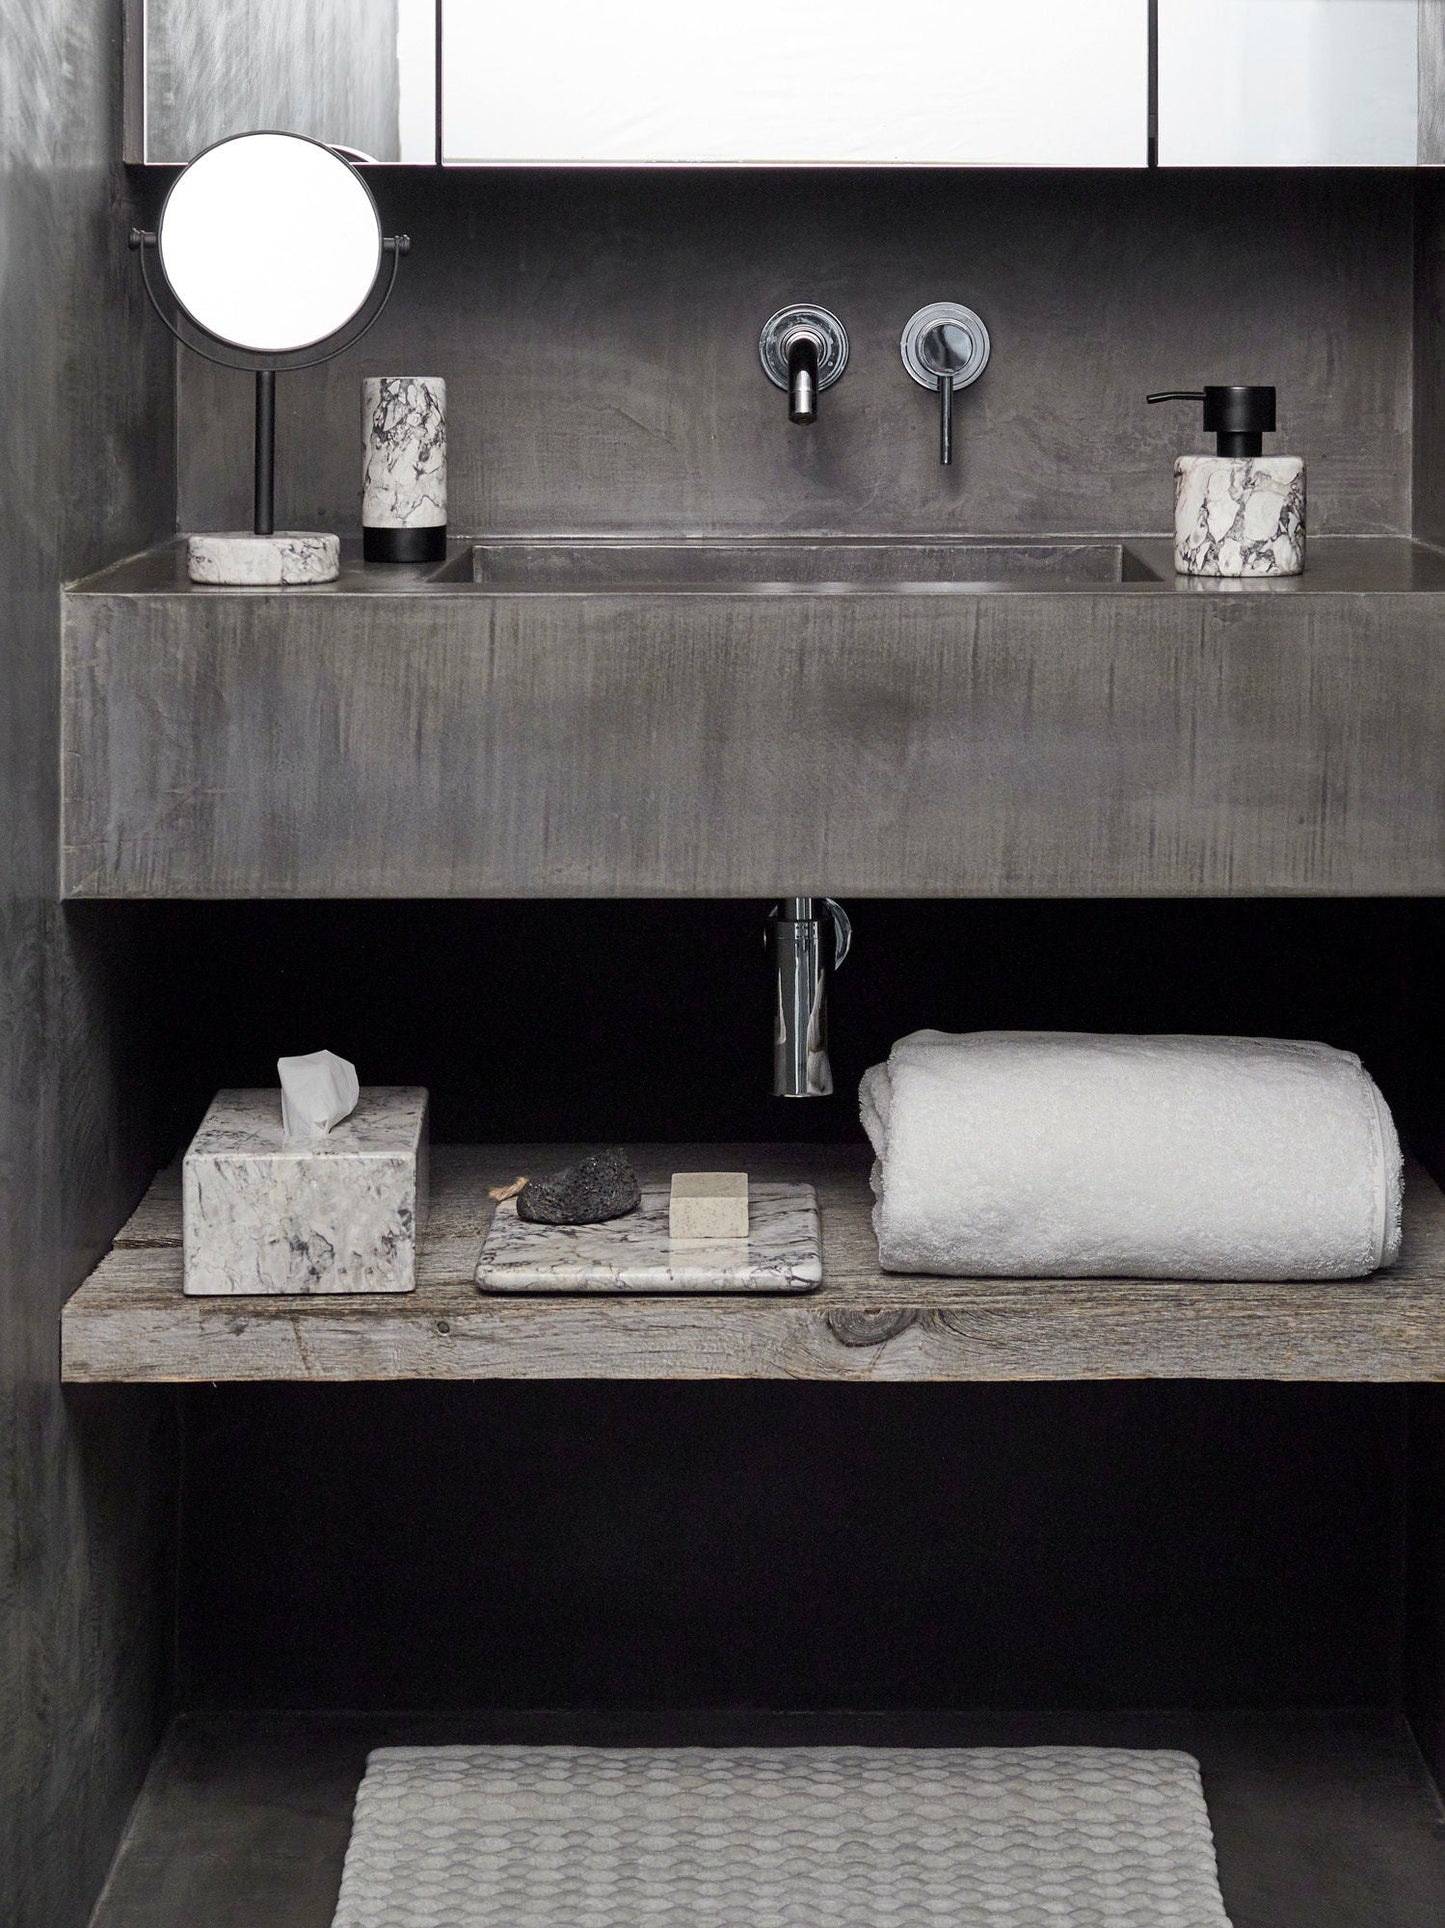 Nero White Stone Bathroom Accessories - Liquid Soap Dispenser - |VESIMI Design| Luxury and Rustic bathrooms online